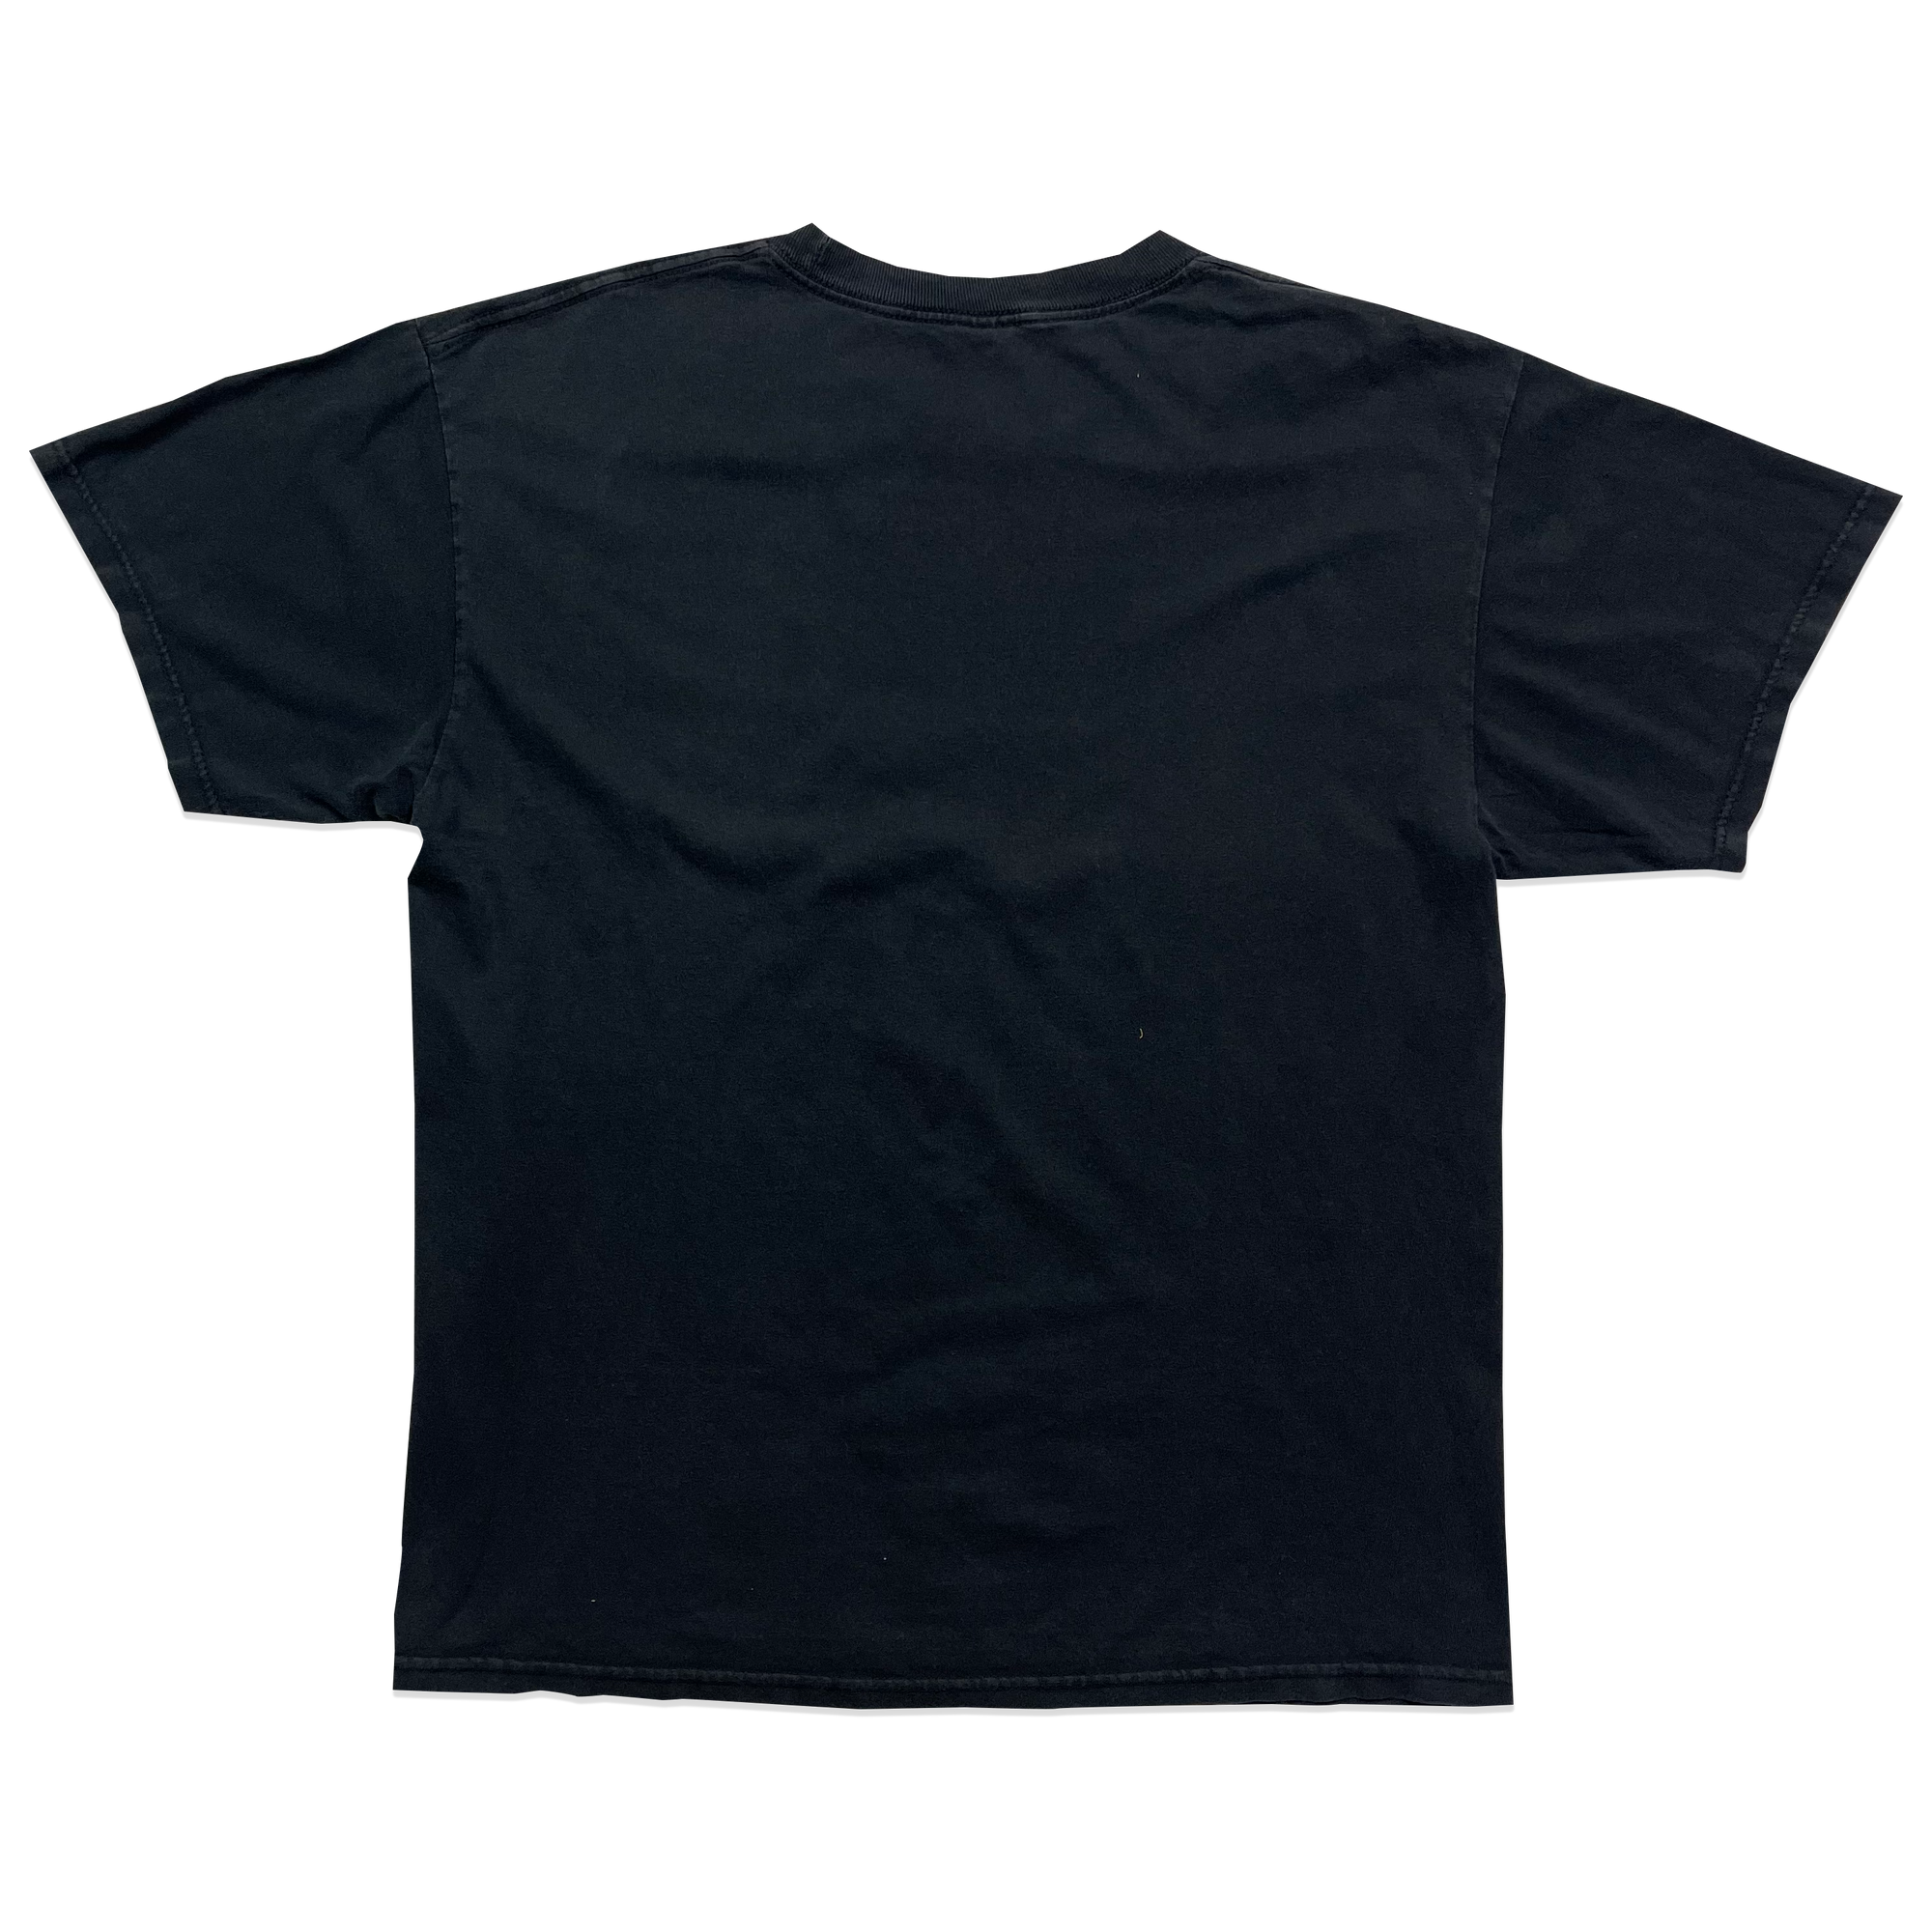 T-shirt - Tron - Noir